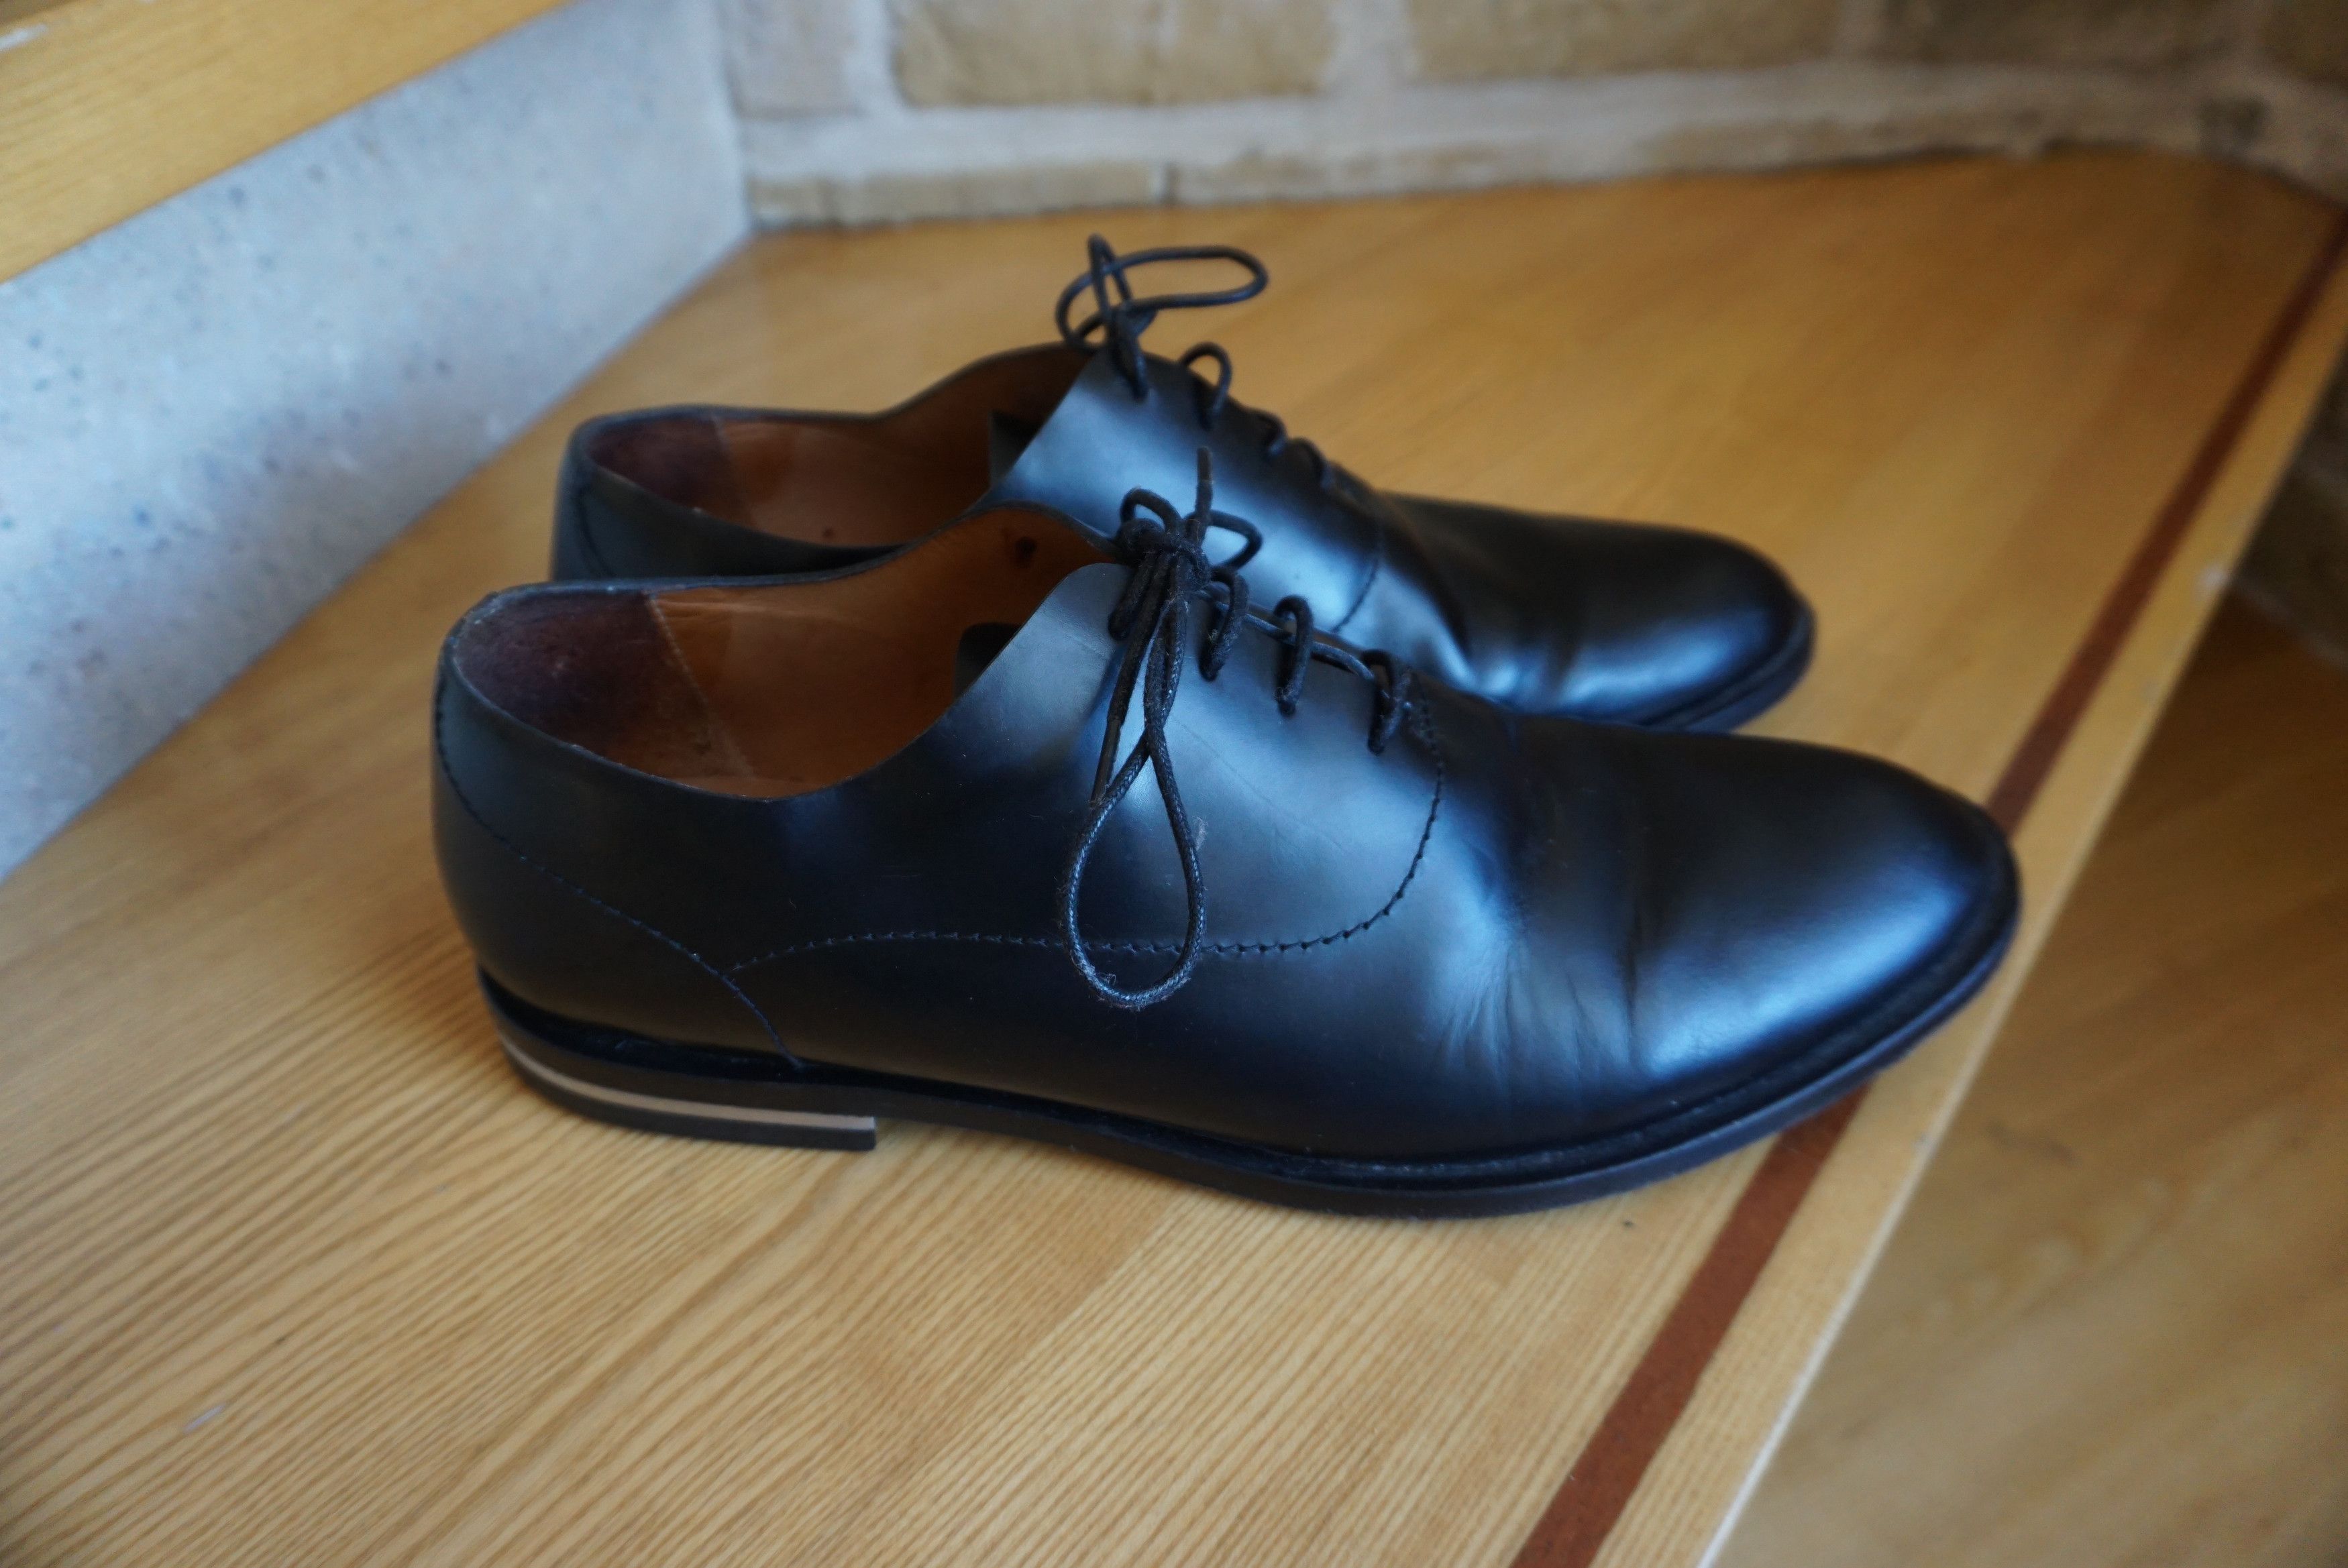 Cos COS RPR$250 leather office shoes EU44 black formal lace up Size US 10.5 / EU 43-44 - 3 Thumbnail